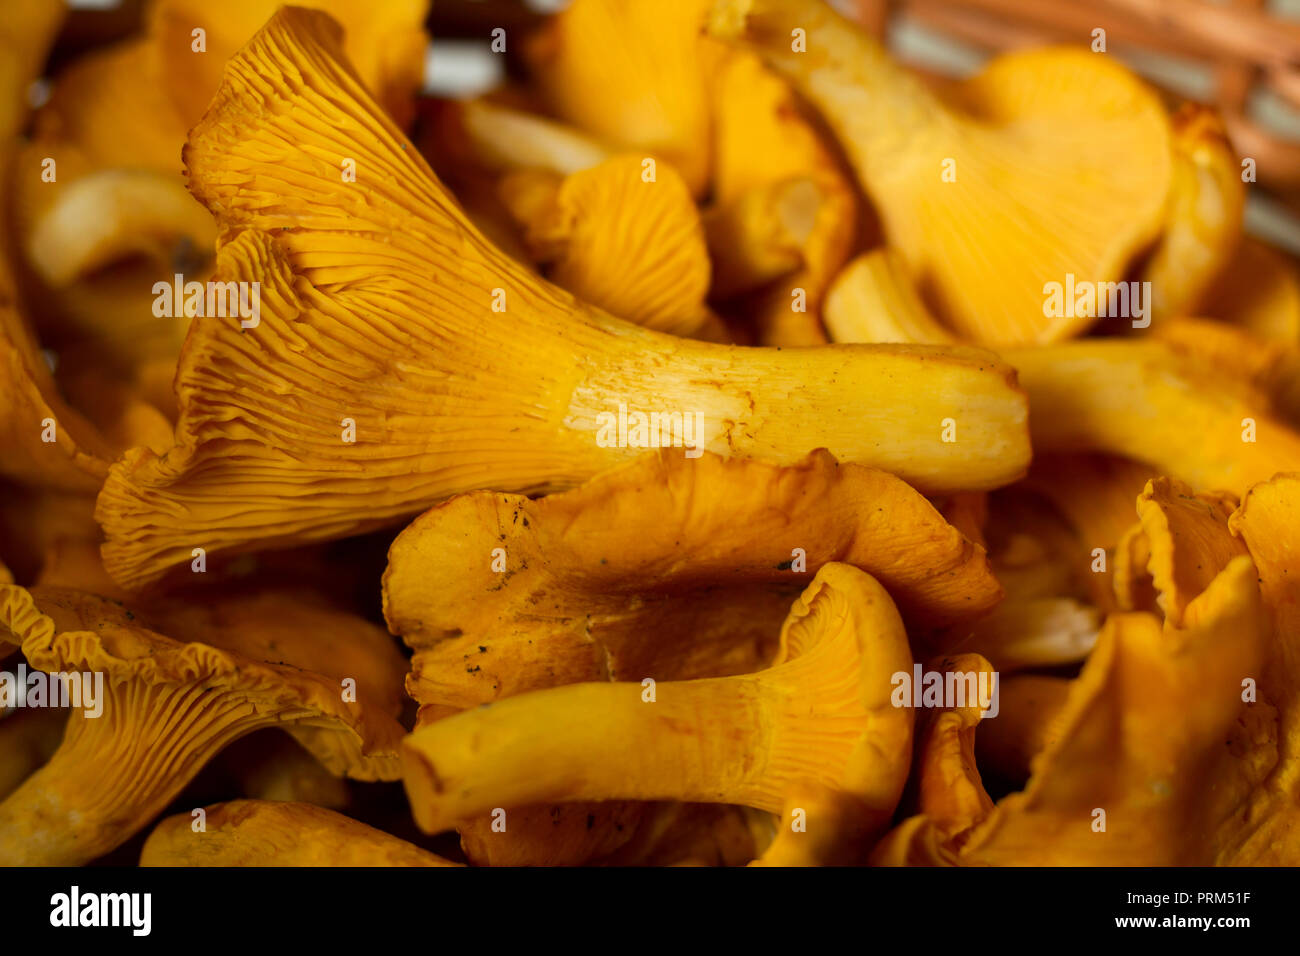 https://c8.alamy.com/comp/PRM51F/close-up-of-chanterelles-and-mushroom-brush-in-basket-PRM51F.jpg